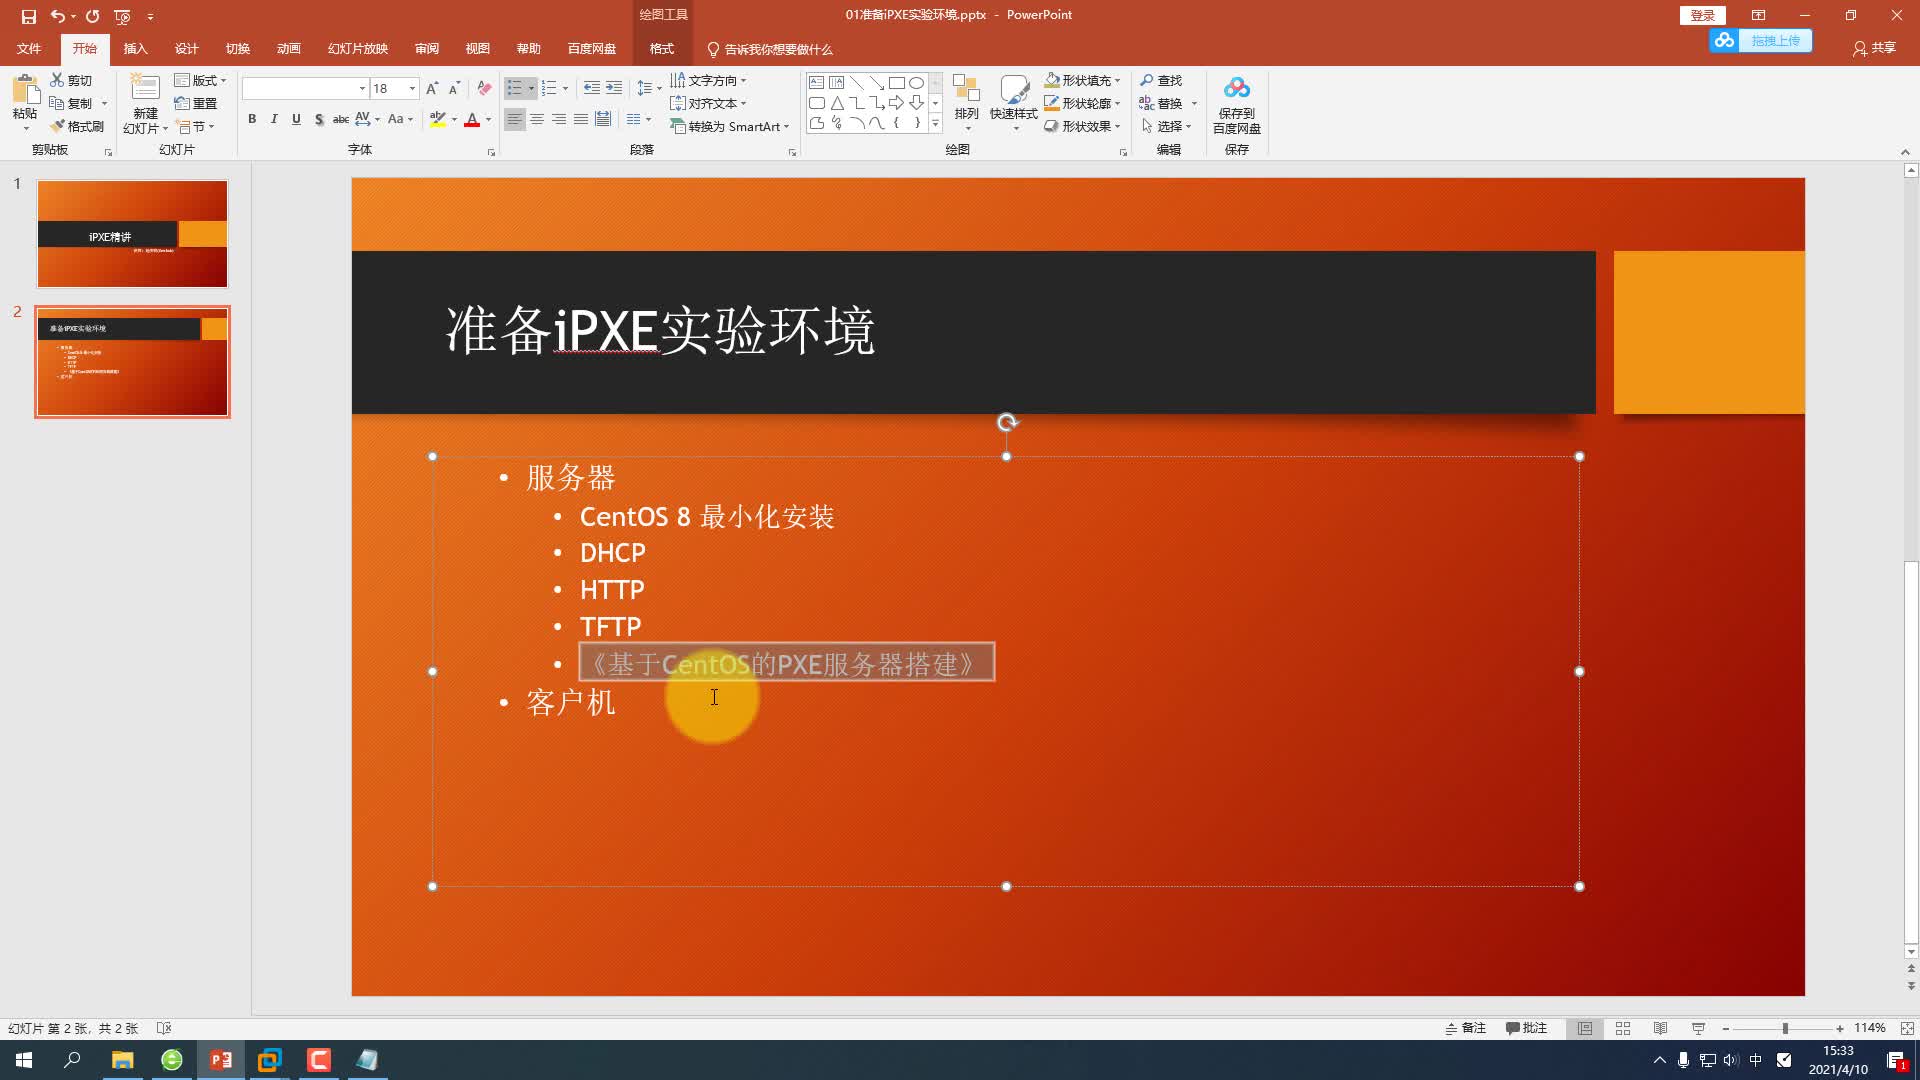 iPXE精讲/PXE/DHCP/TFTP/HTTP/BIOS/UEFI